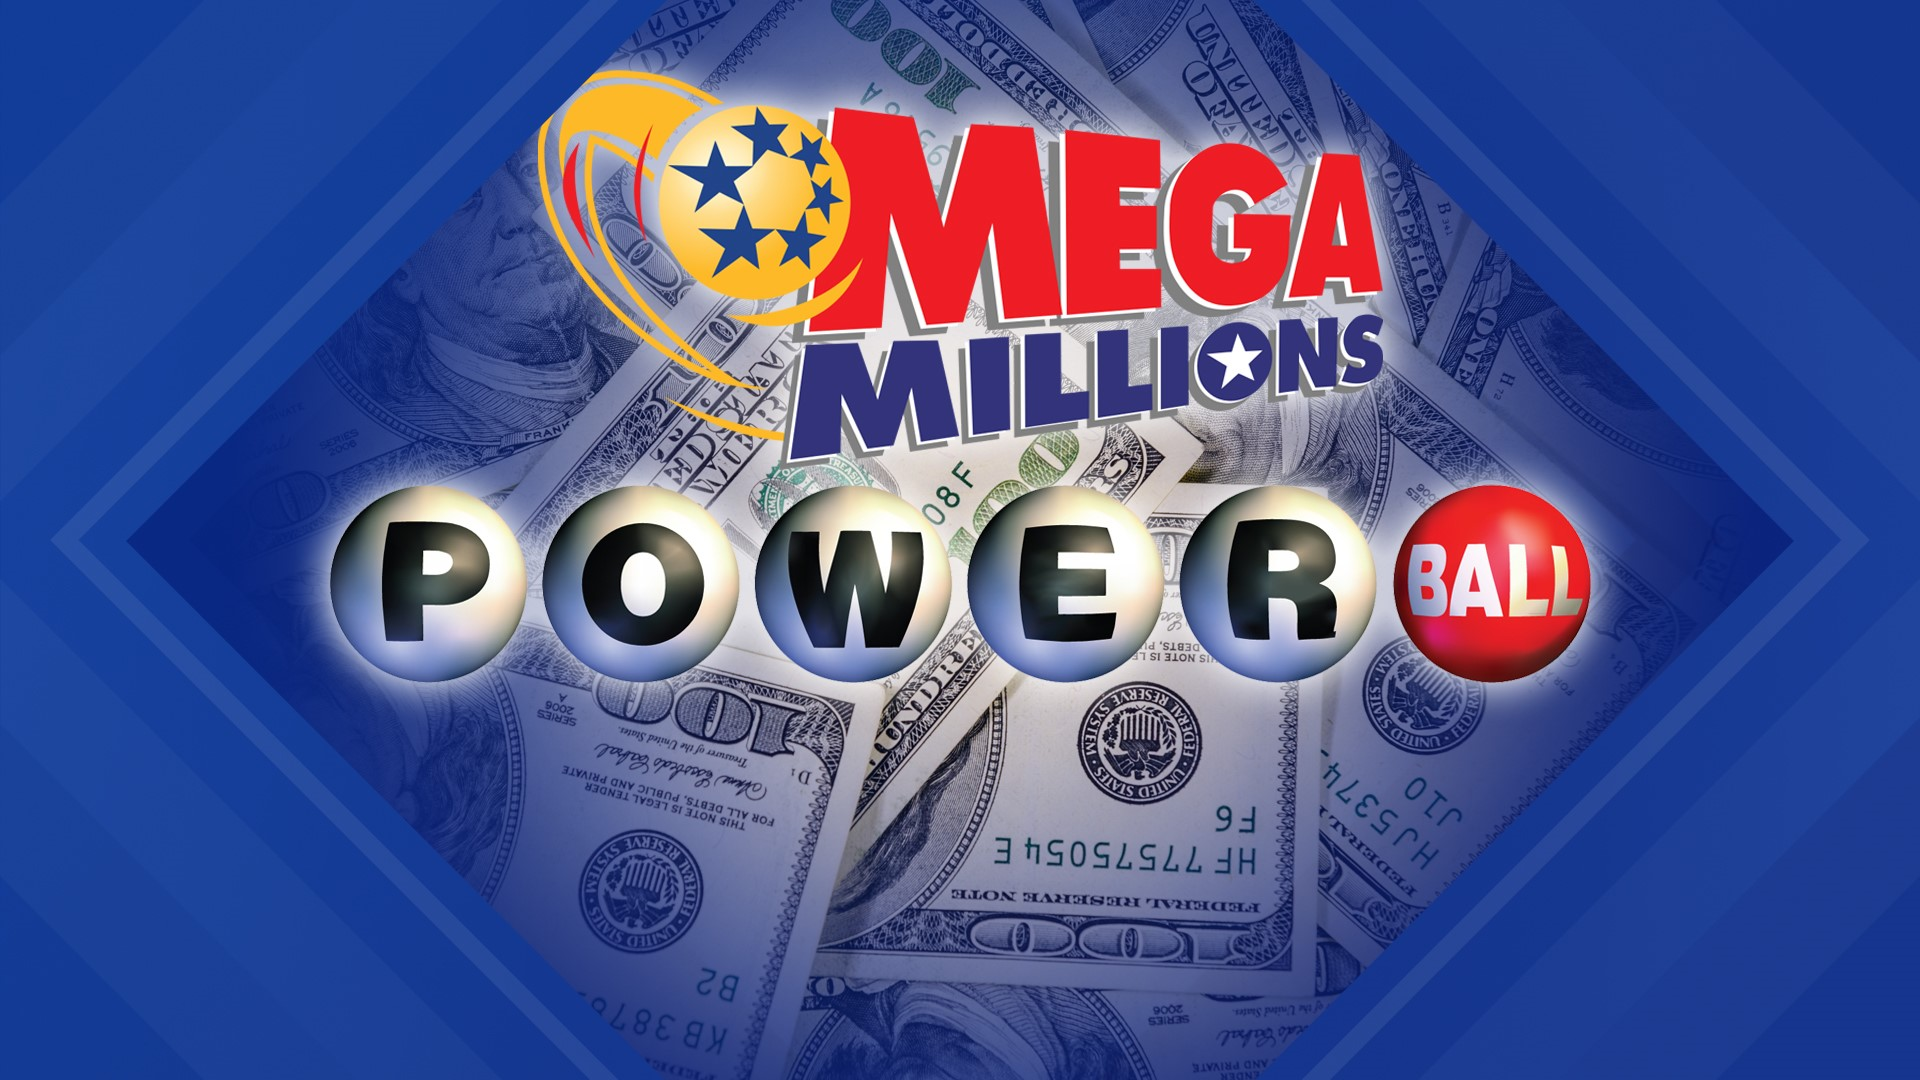 No Powerball Winner as Jackpot Hits $835 Million